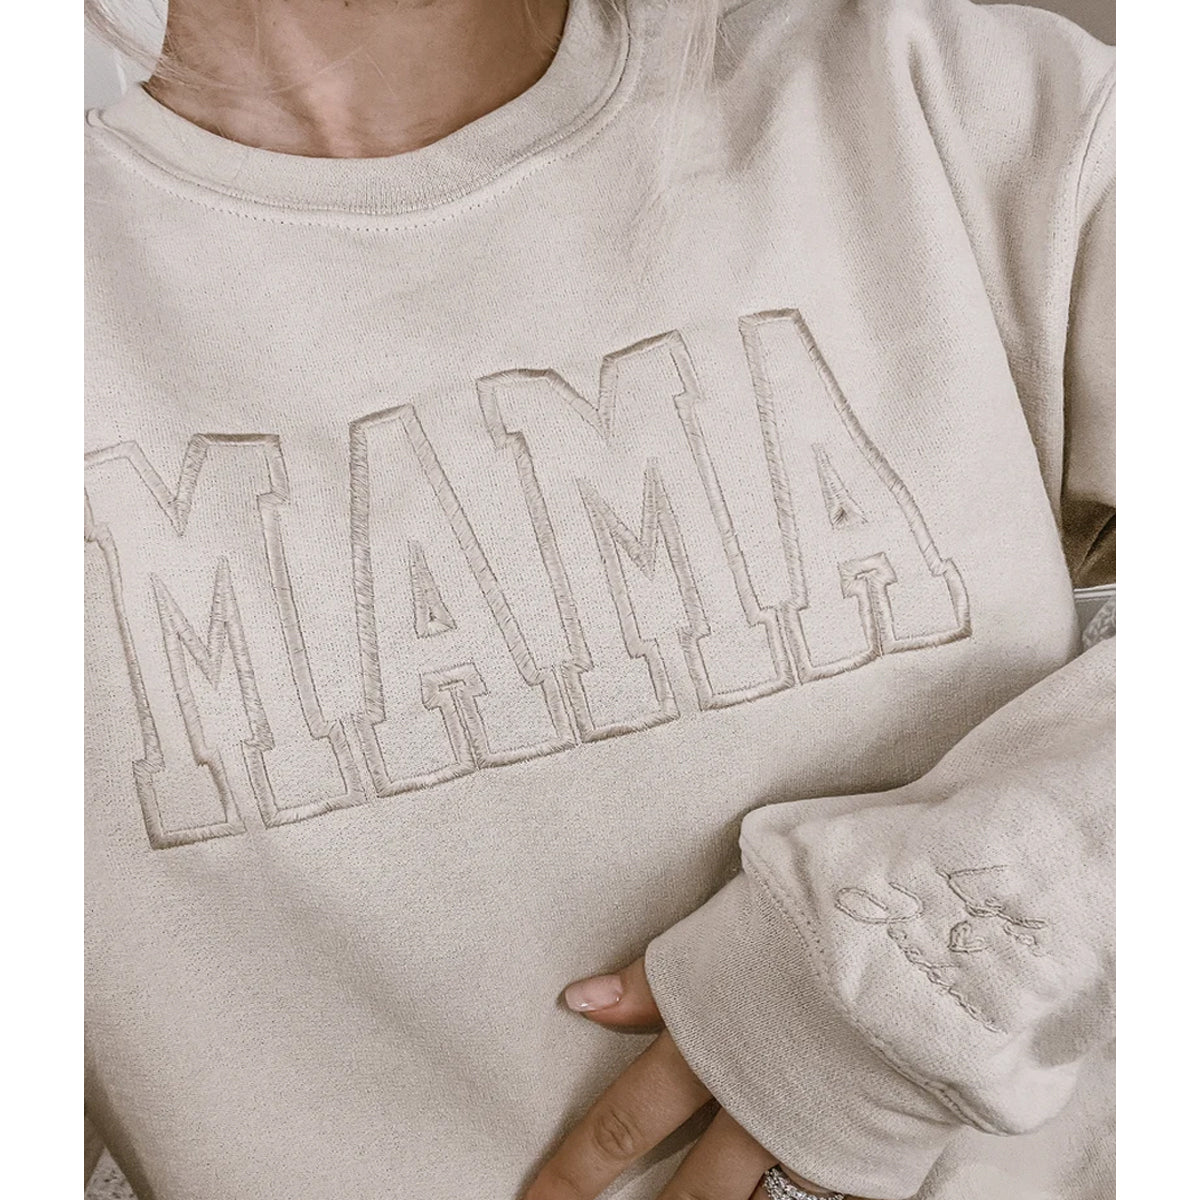 Mama sweatshirt